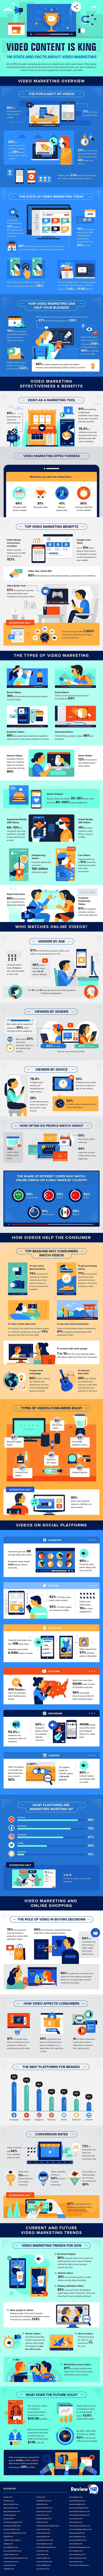 video marketing infographic